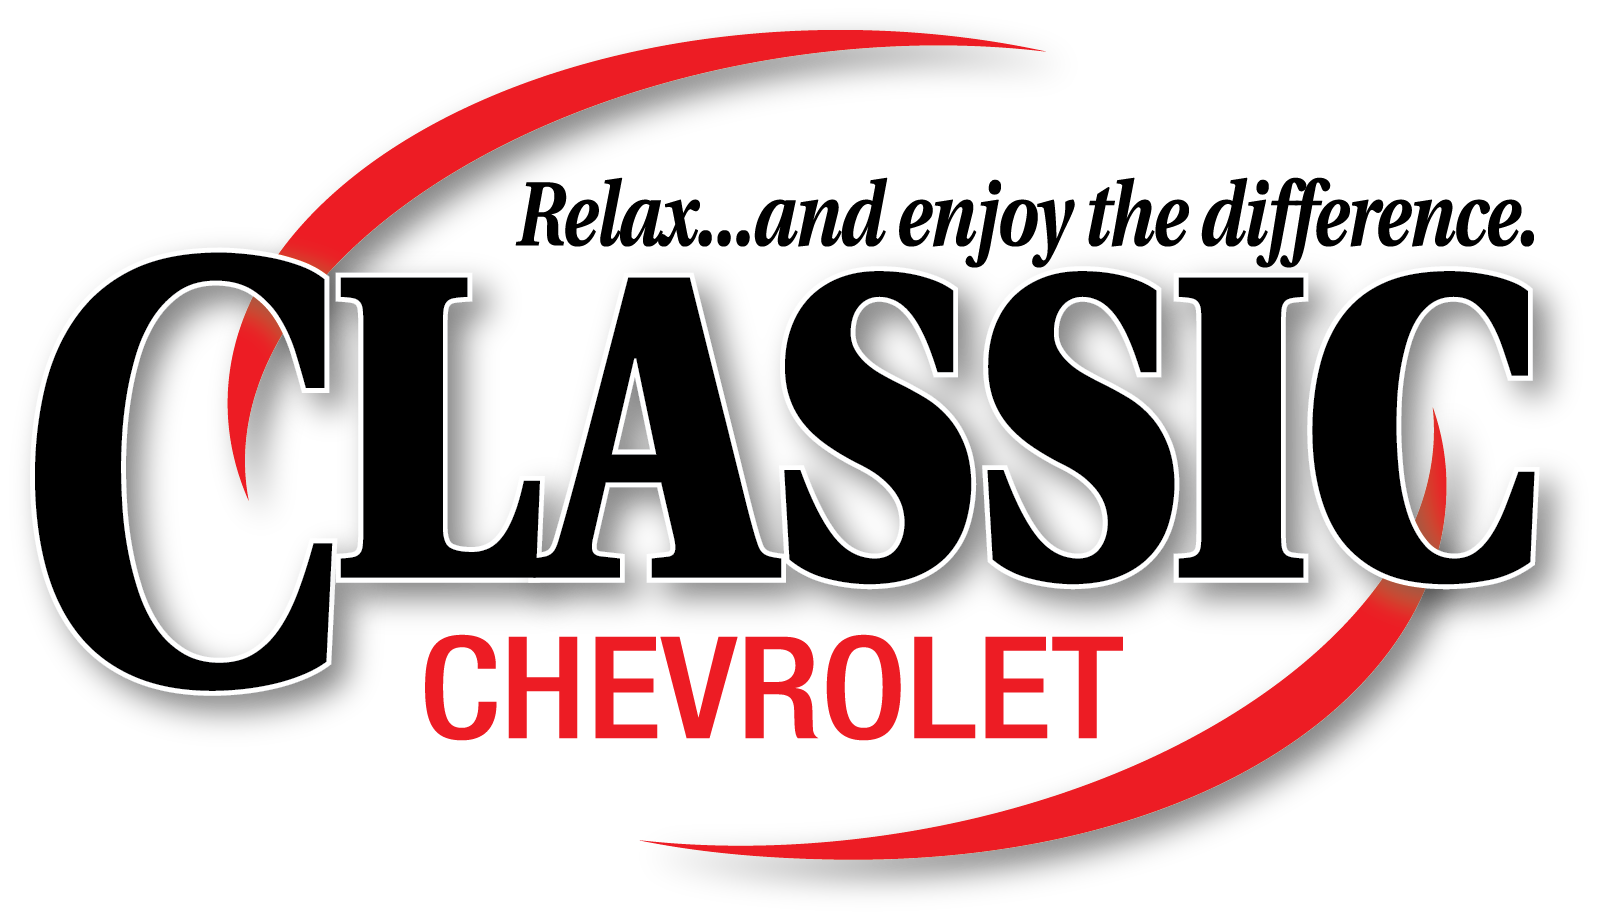 Classic Chevrolet - Grapevine